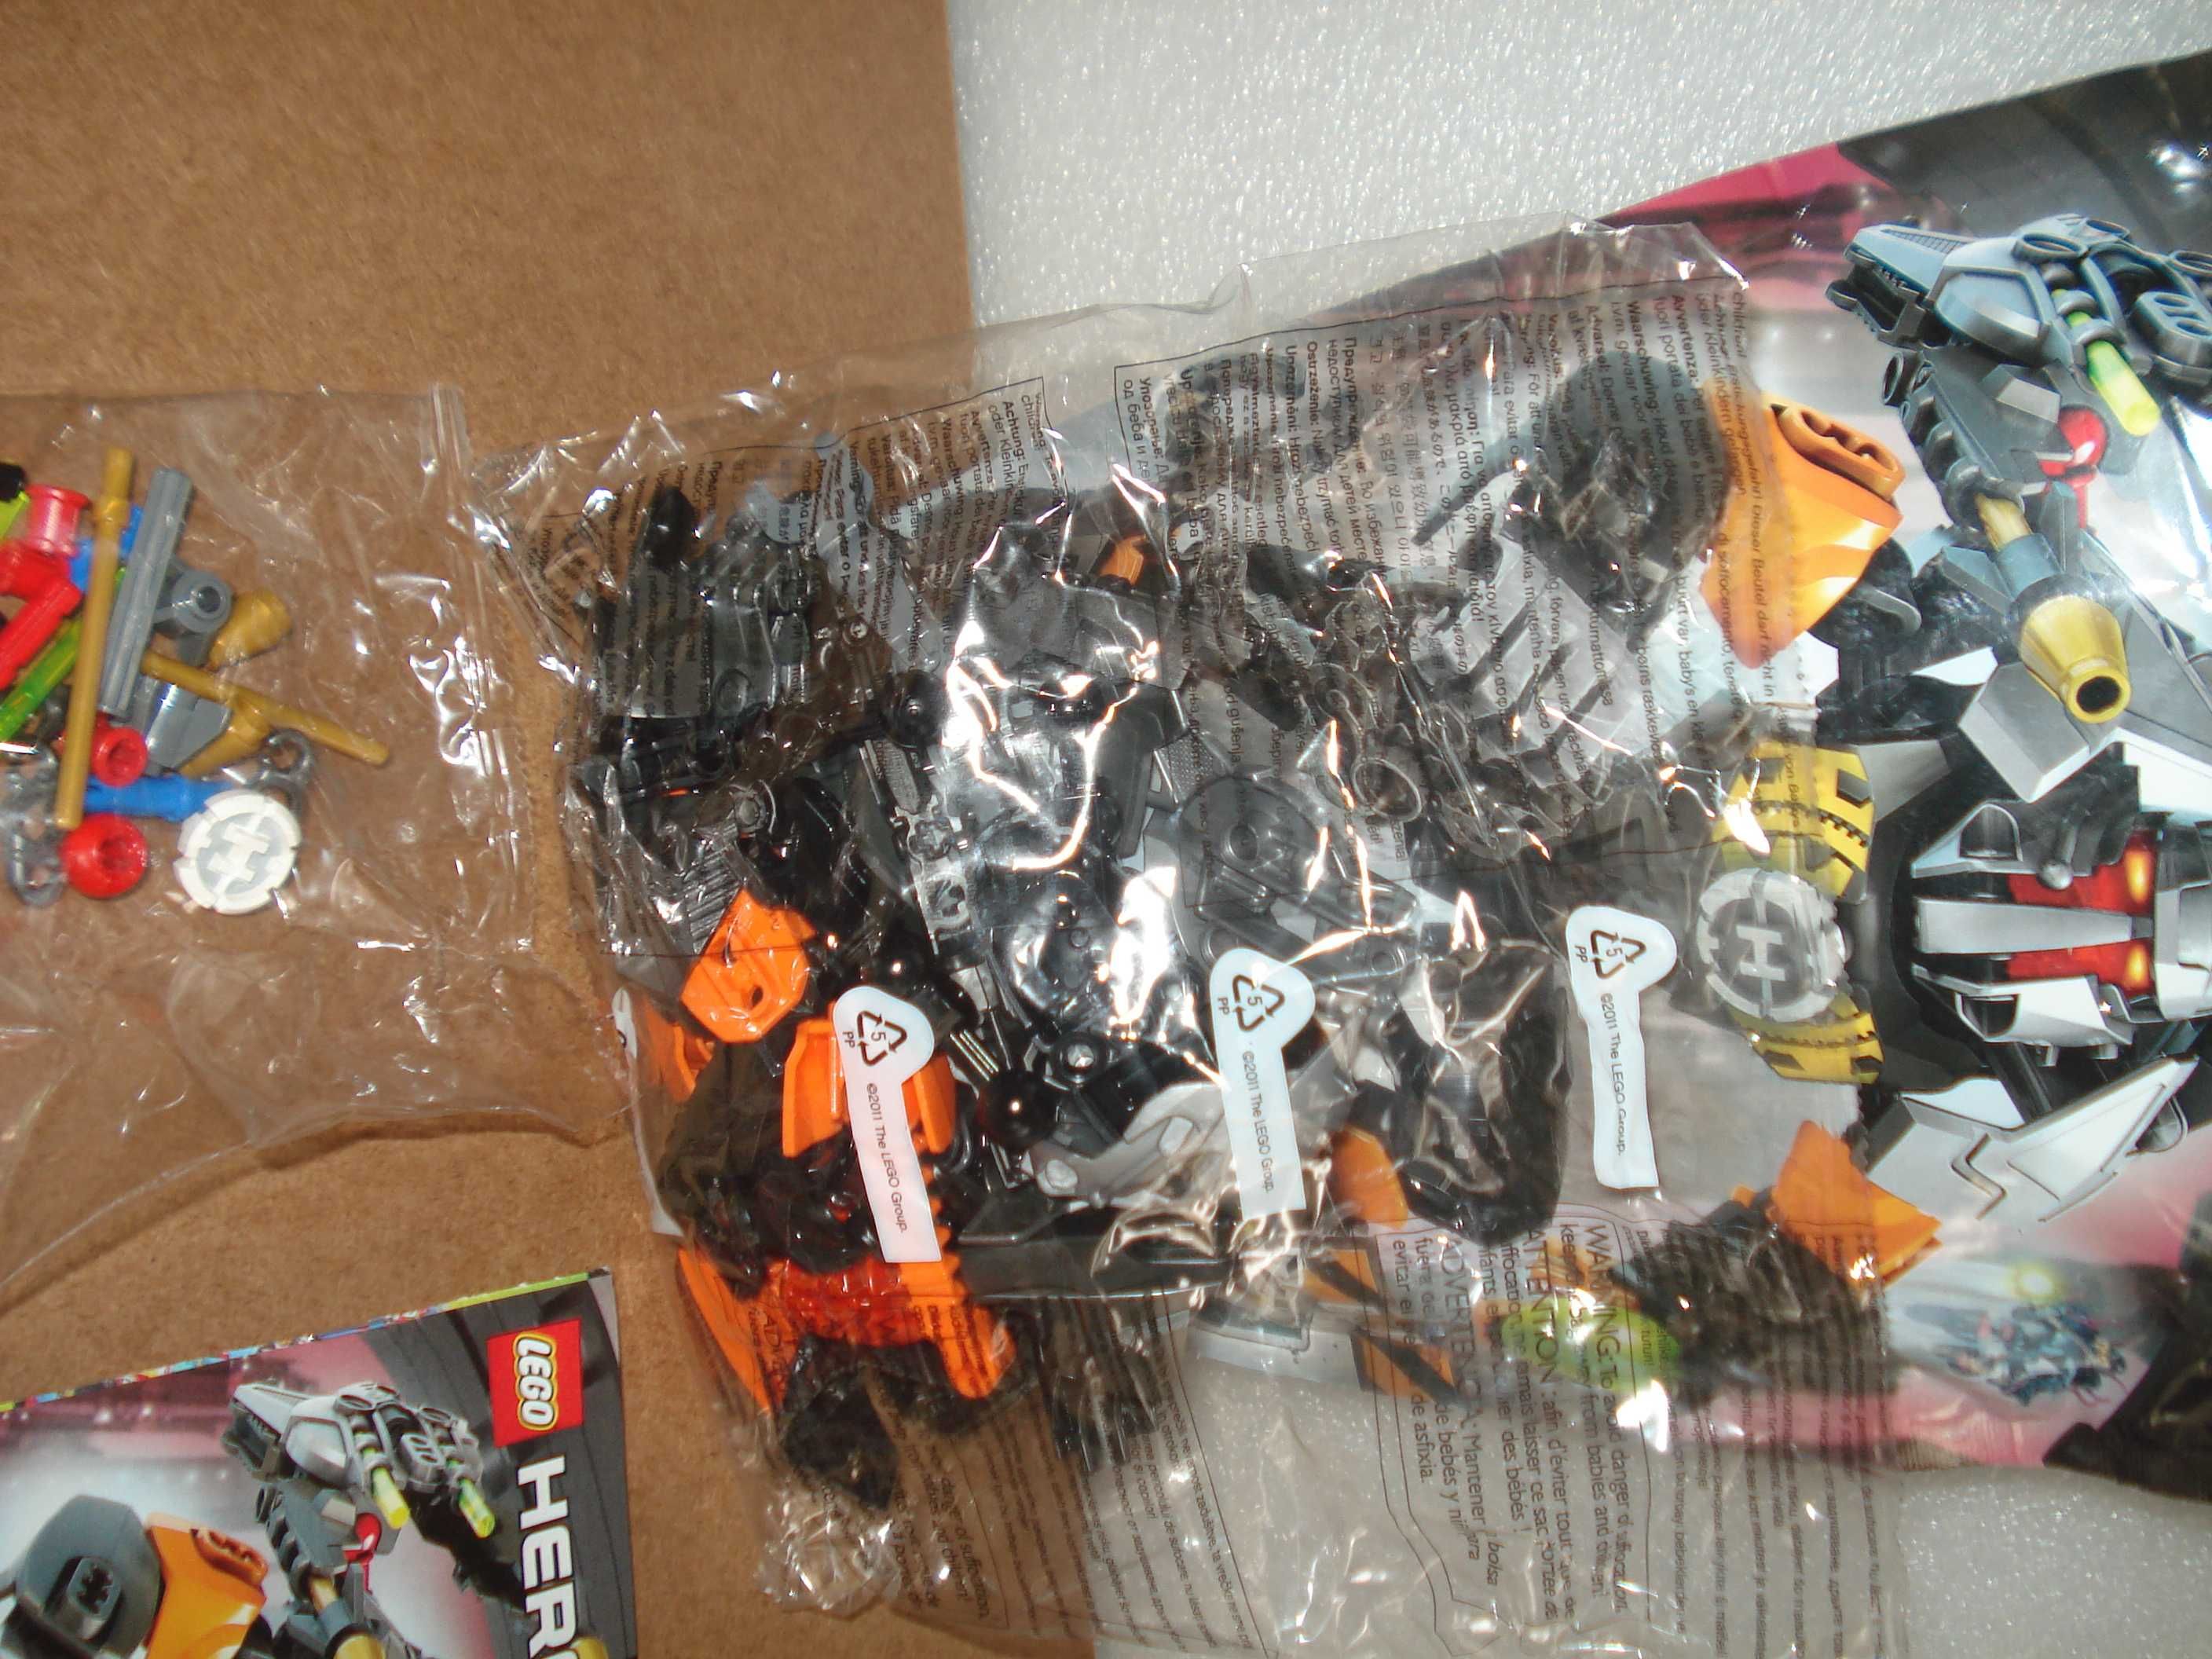 Raro LEGO Bionicle Hero Factory Breakout 6223 - Descontinuado